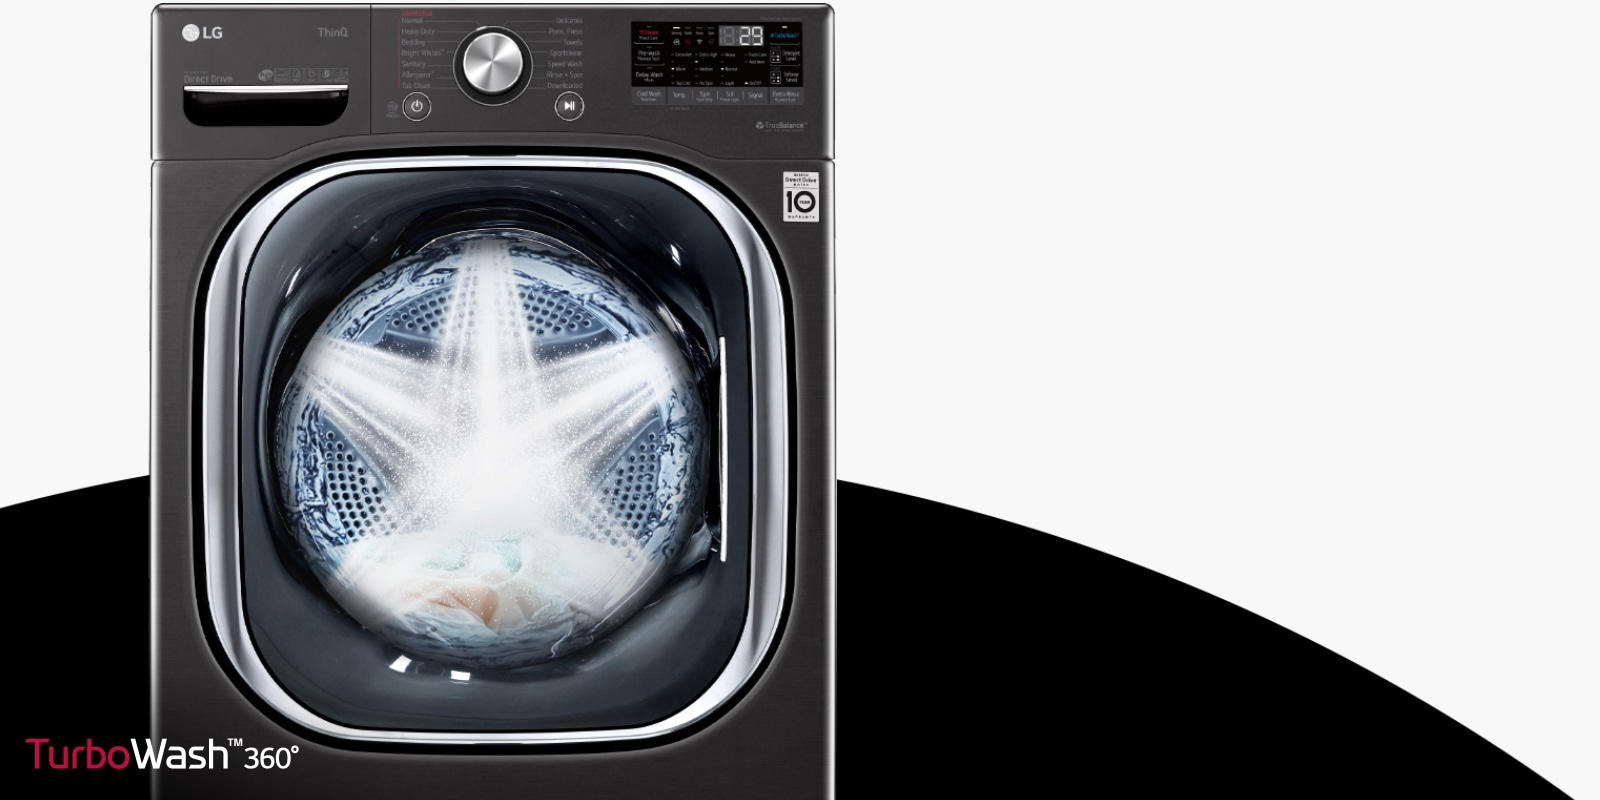 Washer showcasing TurboWash™ 360 technology feature